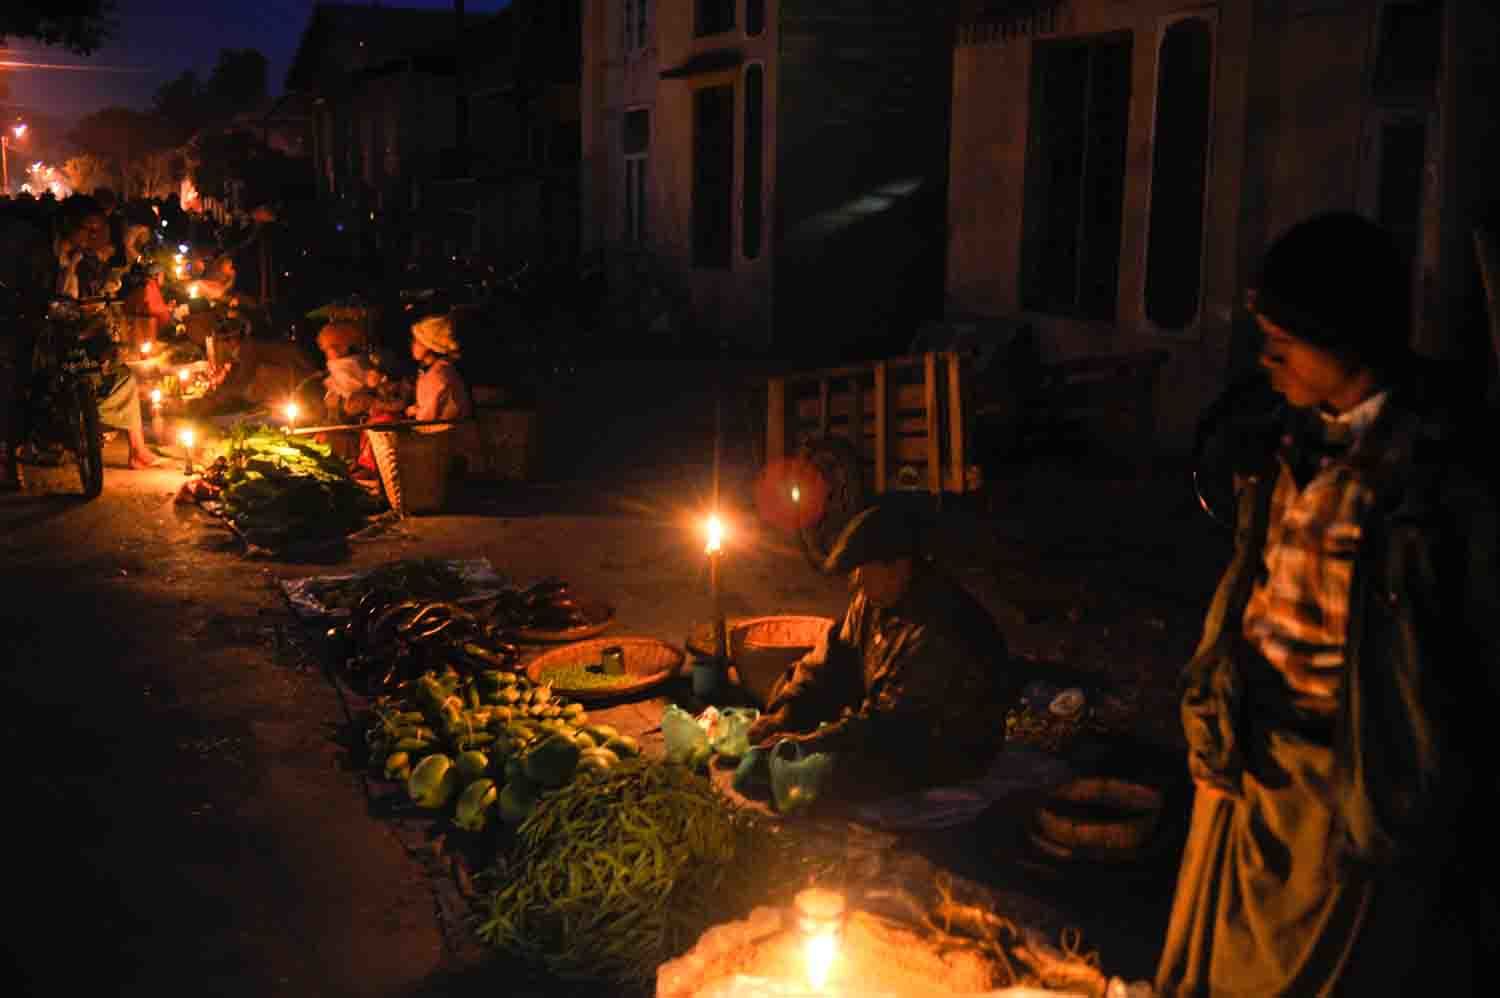 5_Hsipaw candlelit morning market, vendors_Credit to Naomi Duguid.jpg